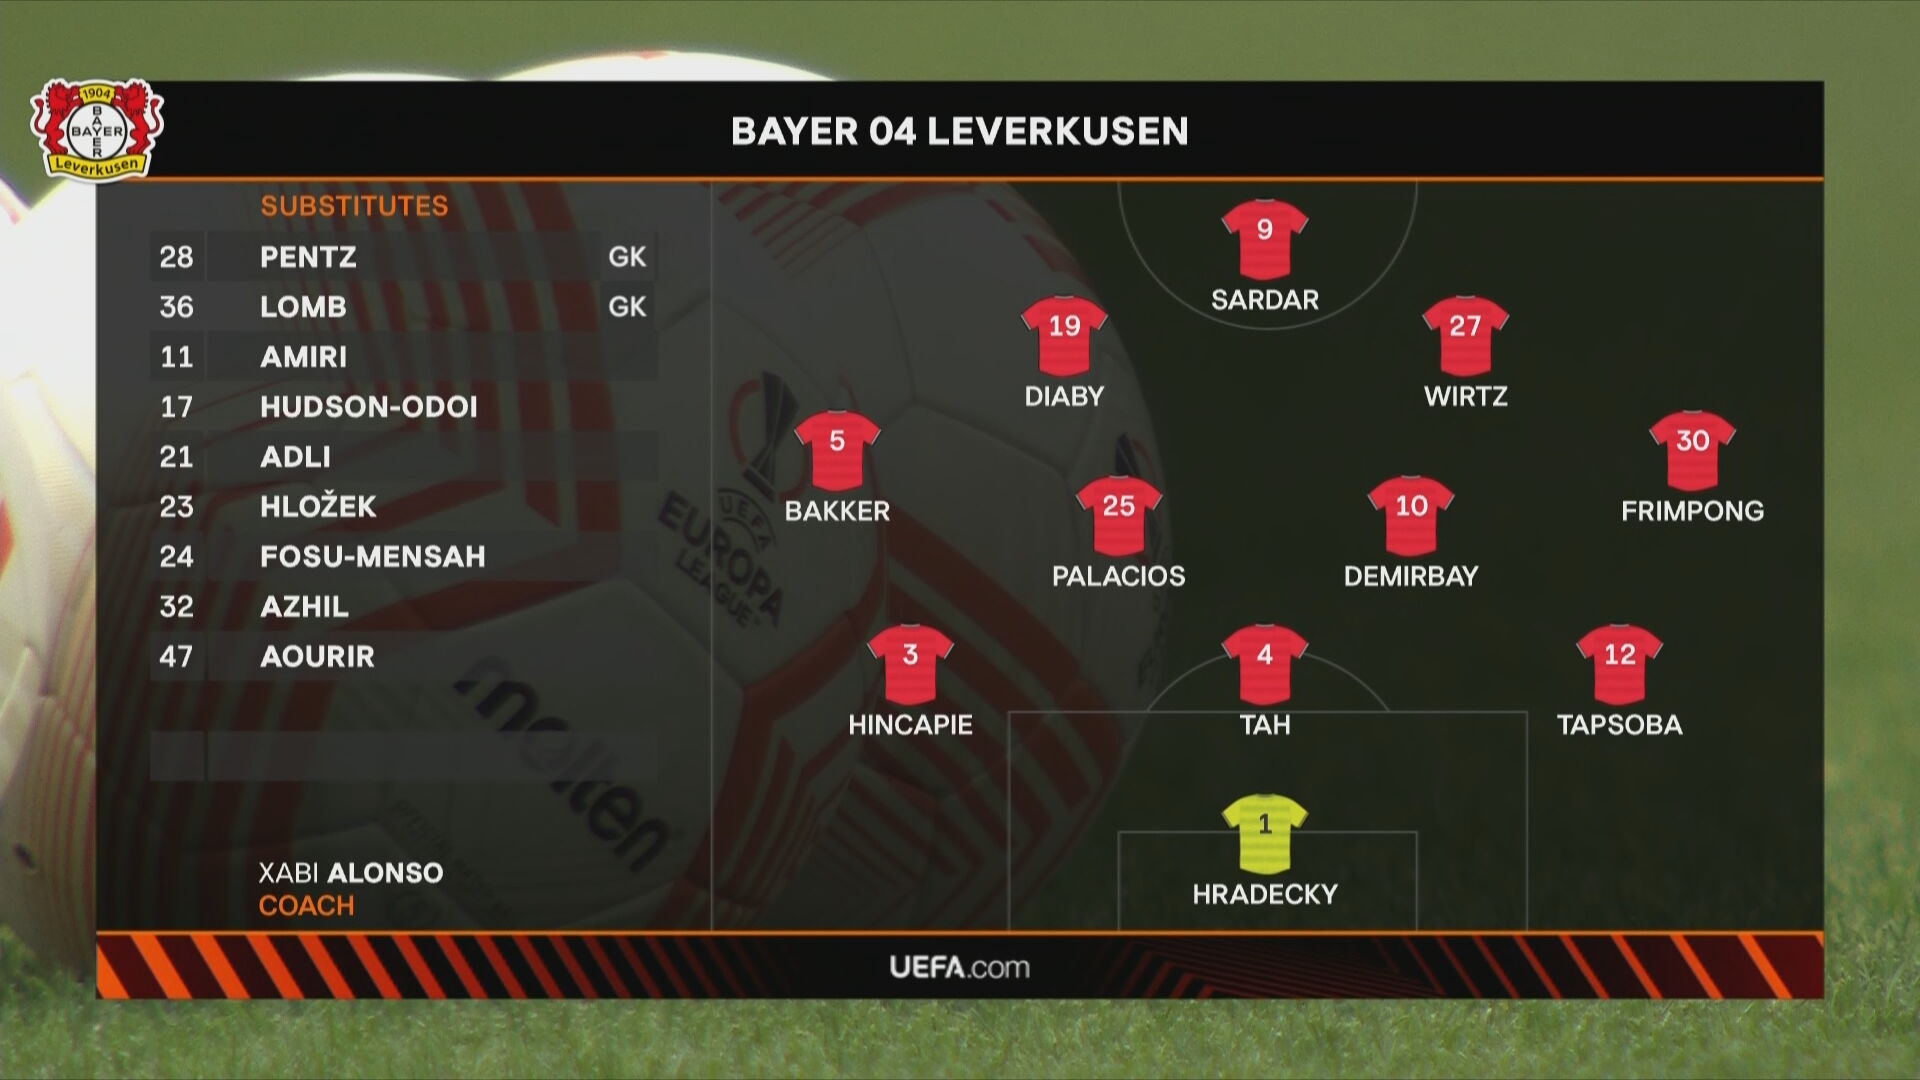 El once del Bayern Leverkusen